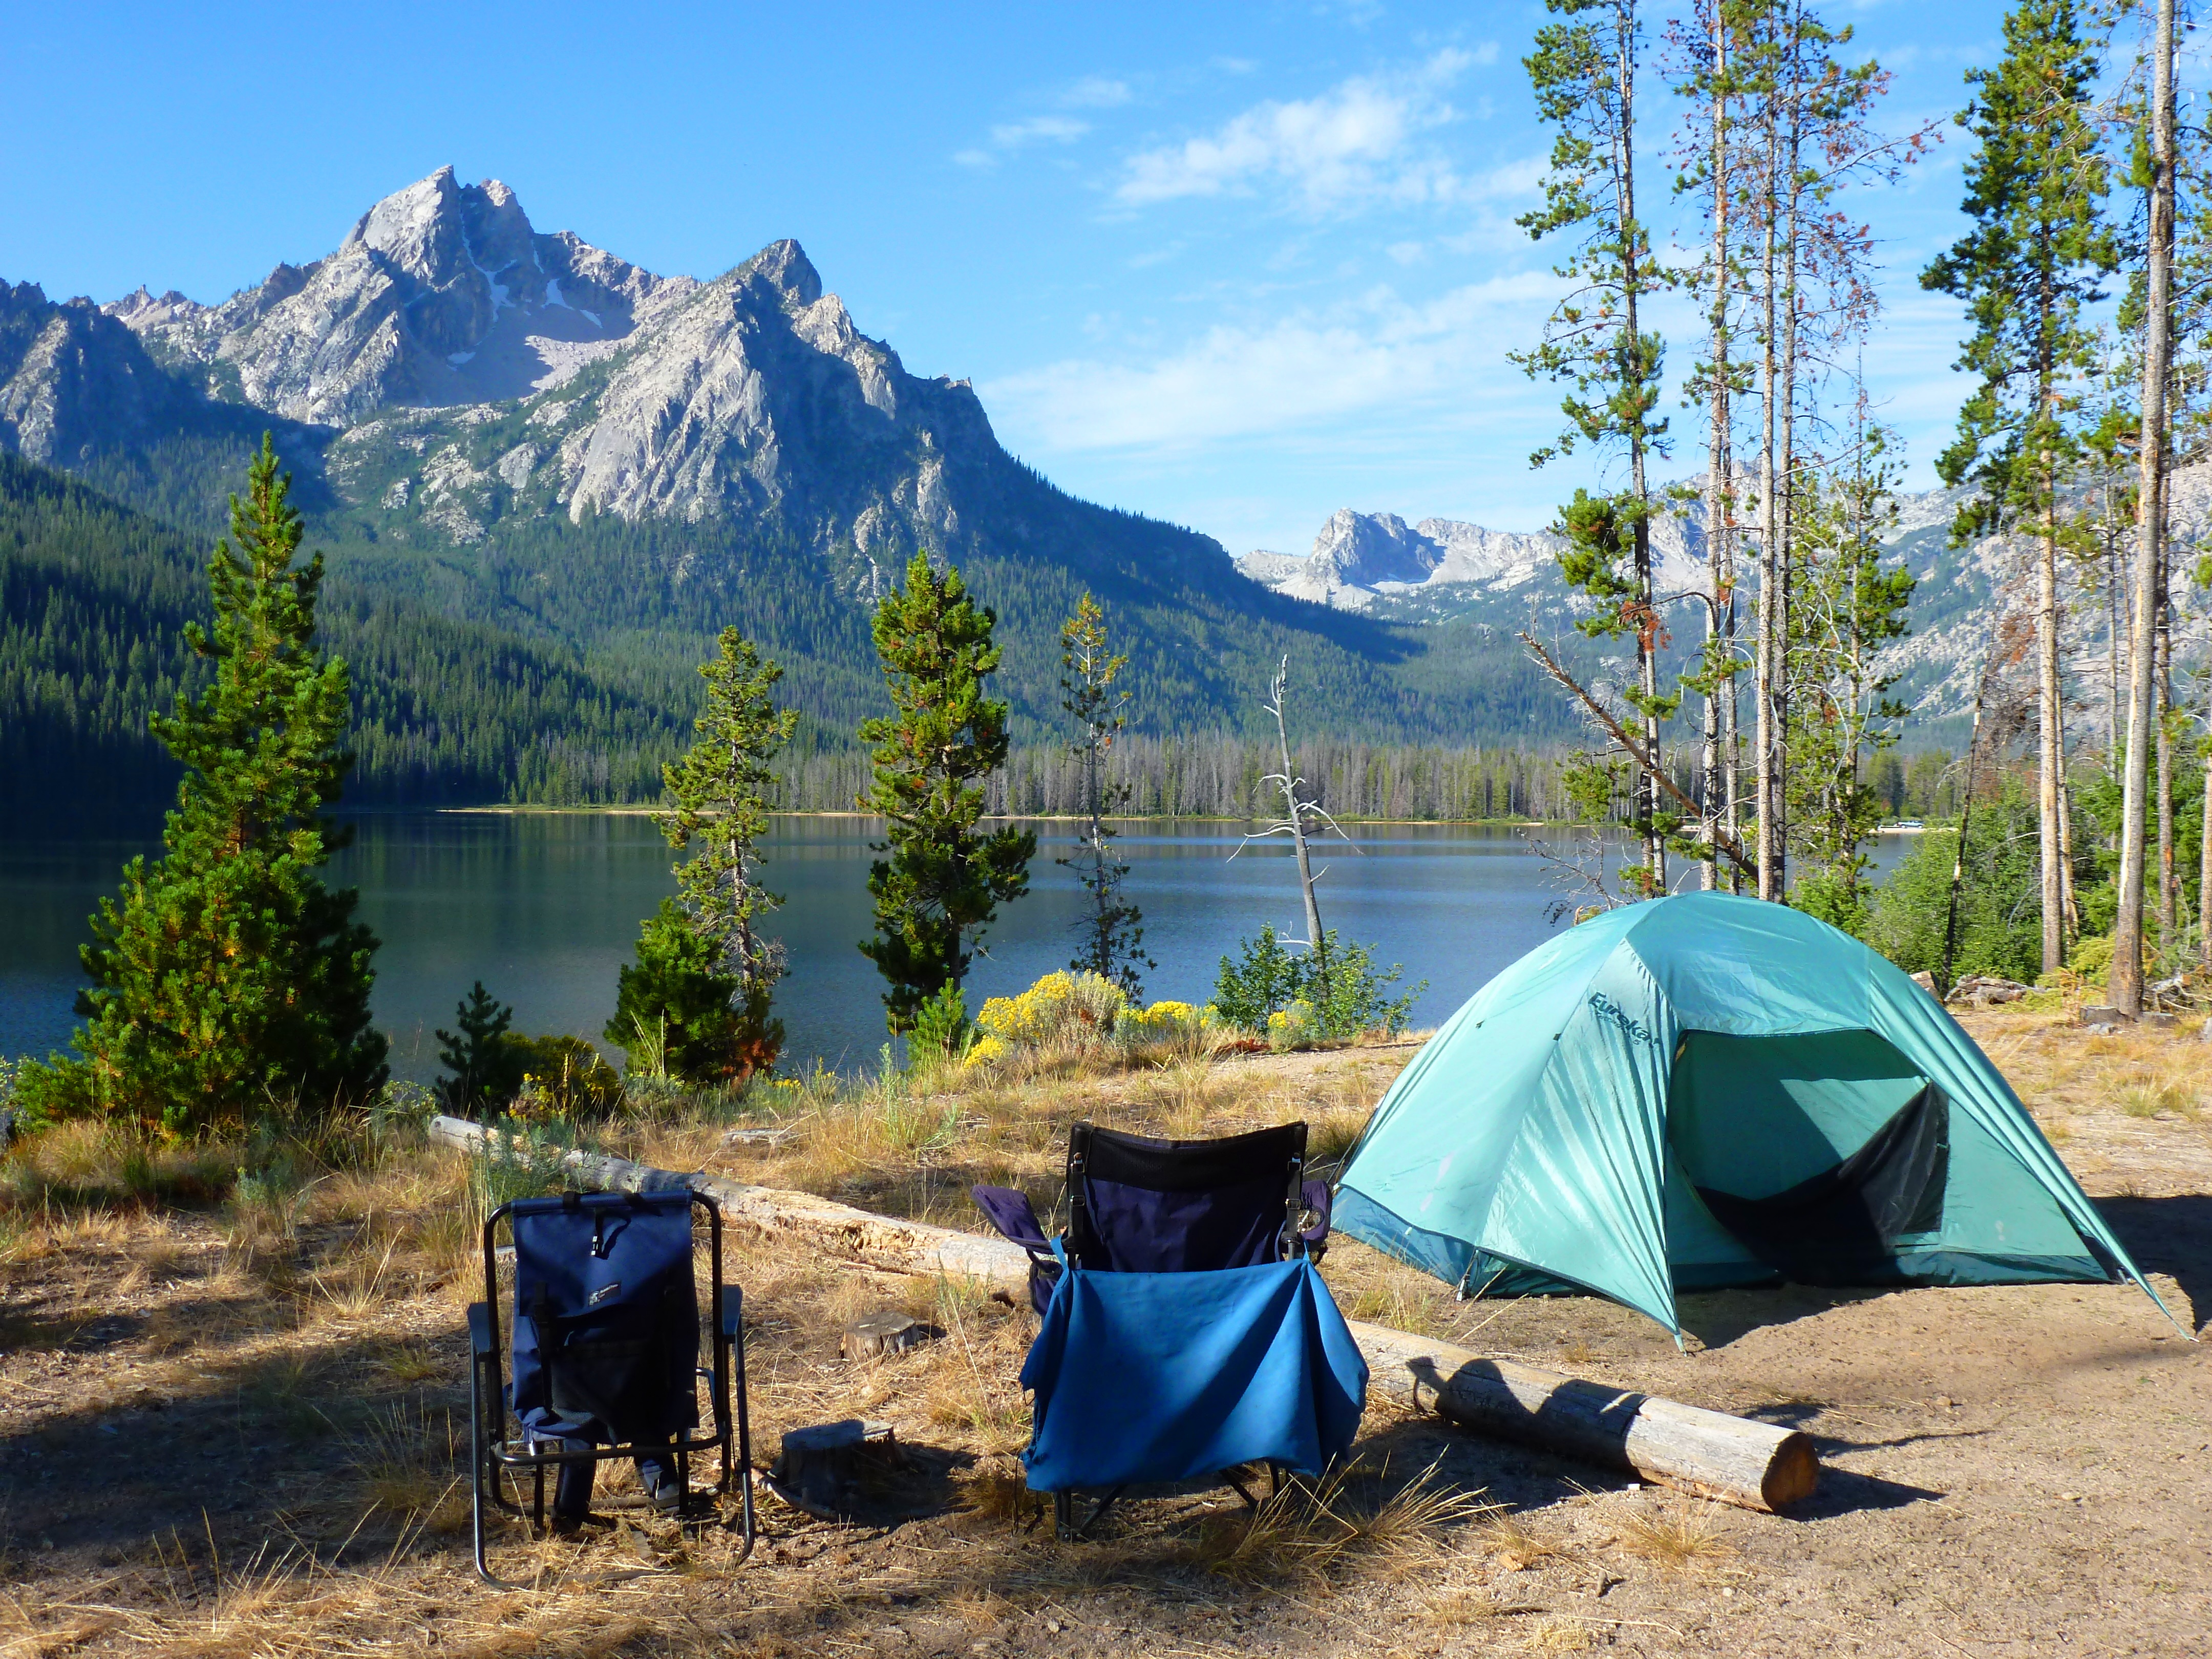 Tourist camp. Кемпинг в Карелии. Озеро Рица кемпинг у озера. Поход с палатками. Мультинские озера палатки.